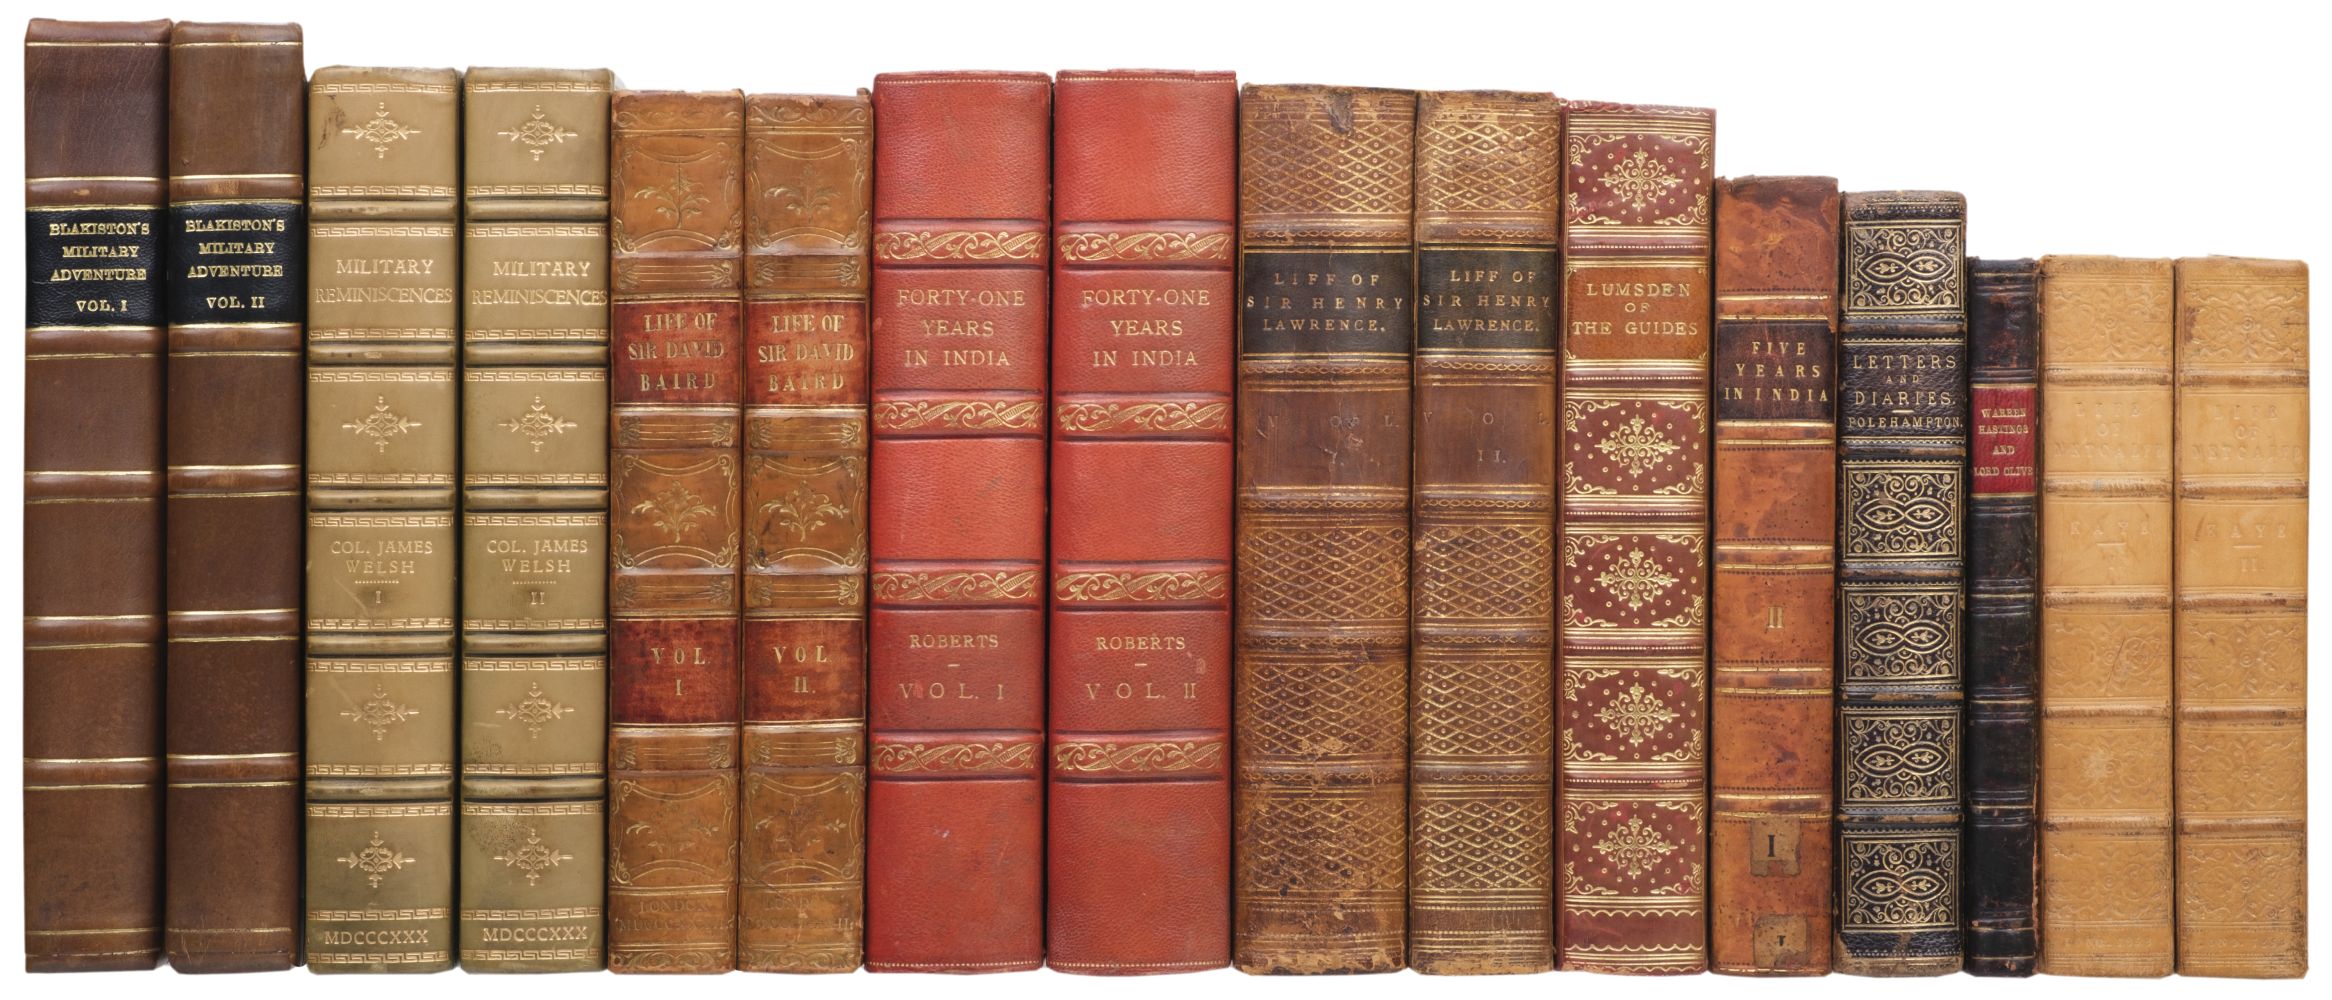 Blakiston (Major John). Twelve Years' Military Adventure, 2 volumes, 1829, and others